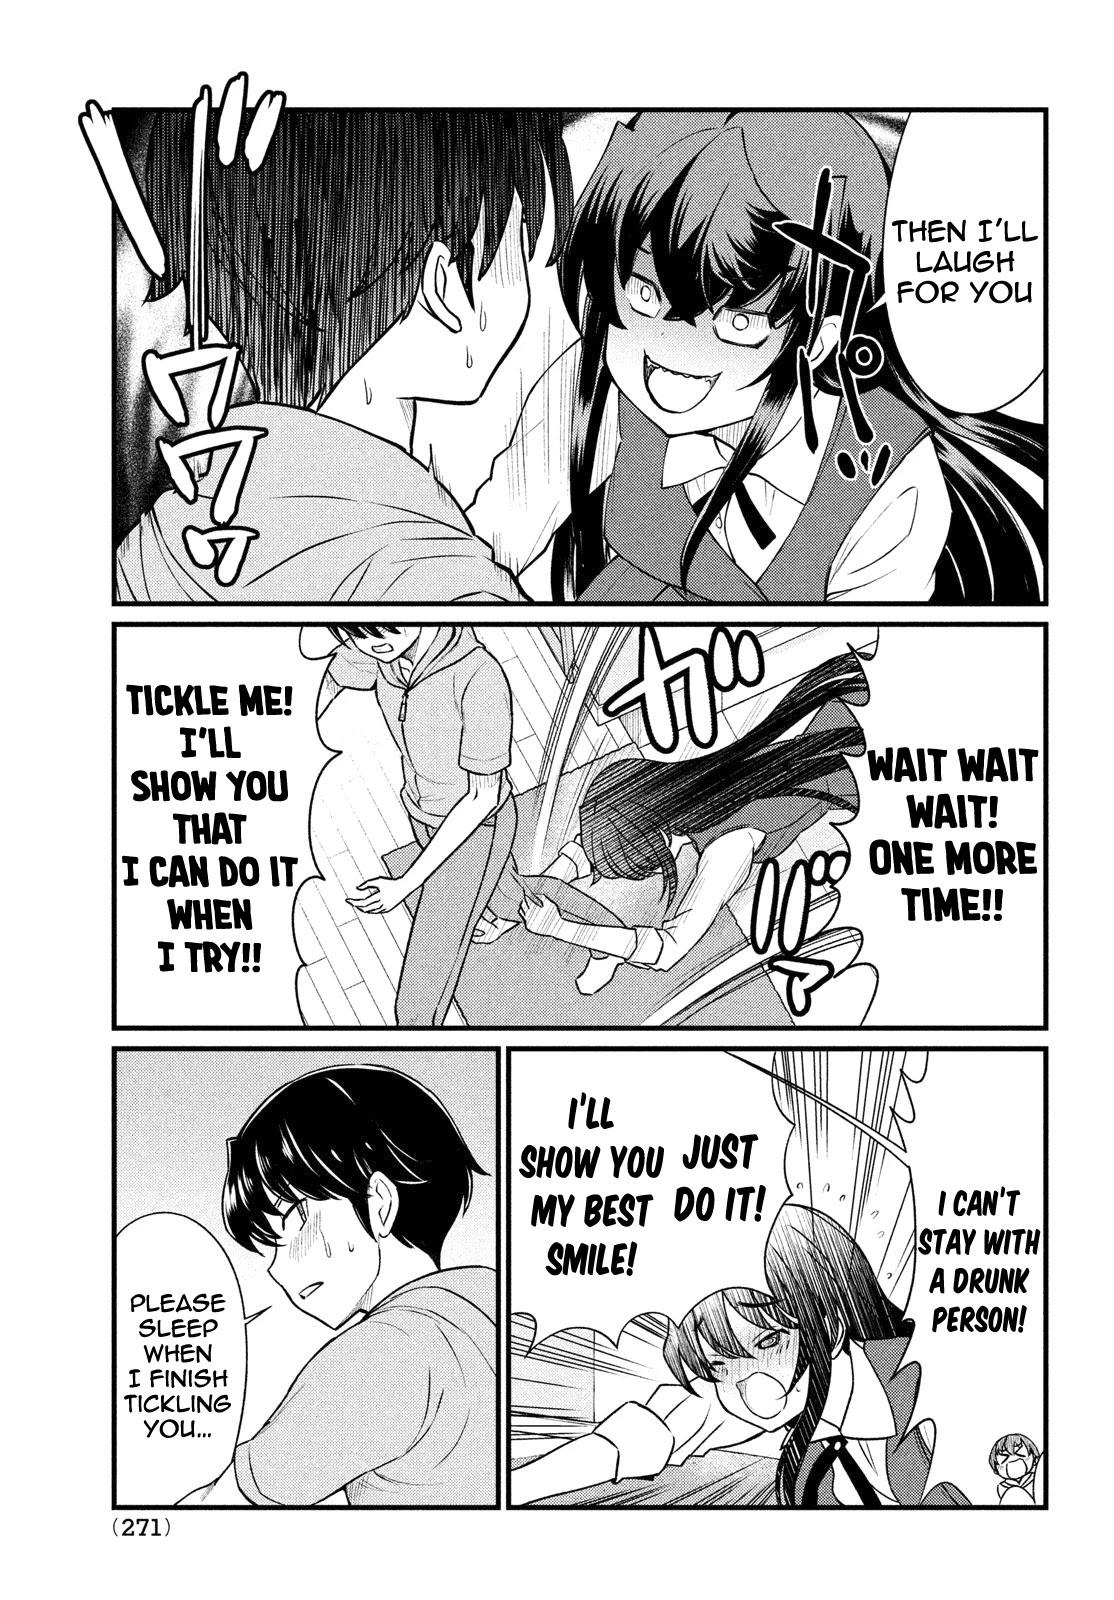 Tickling teacher manga